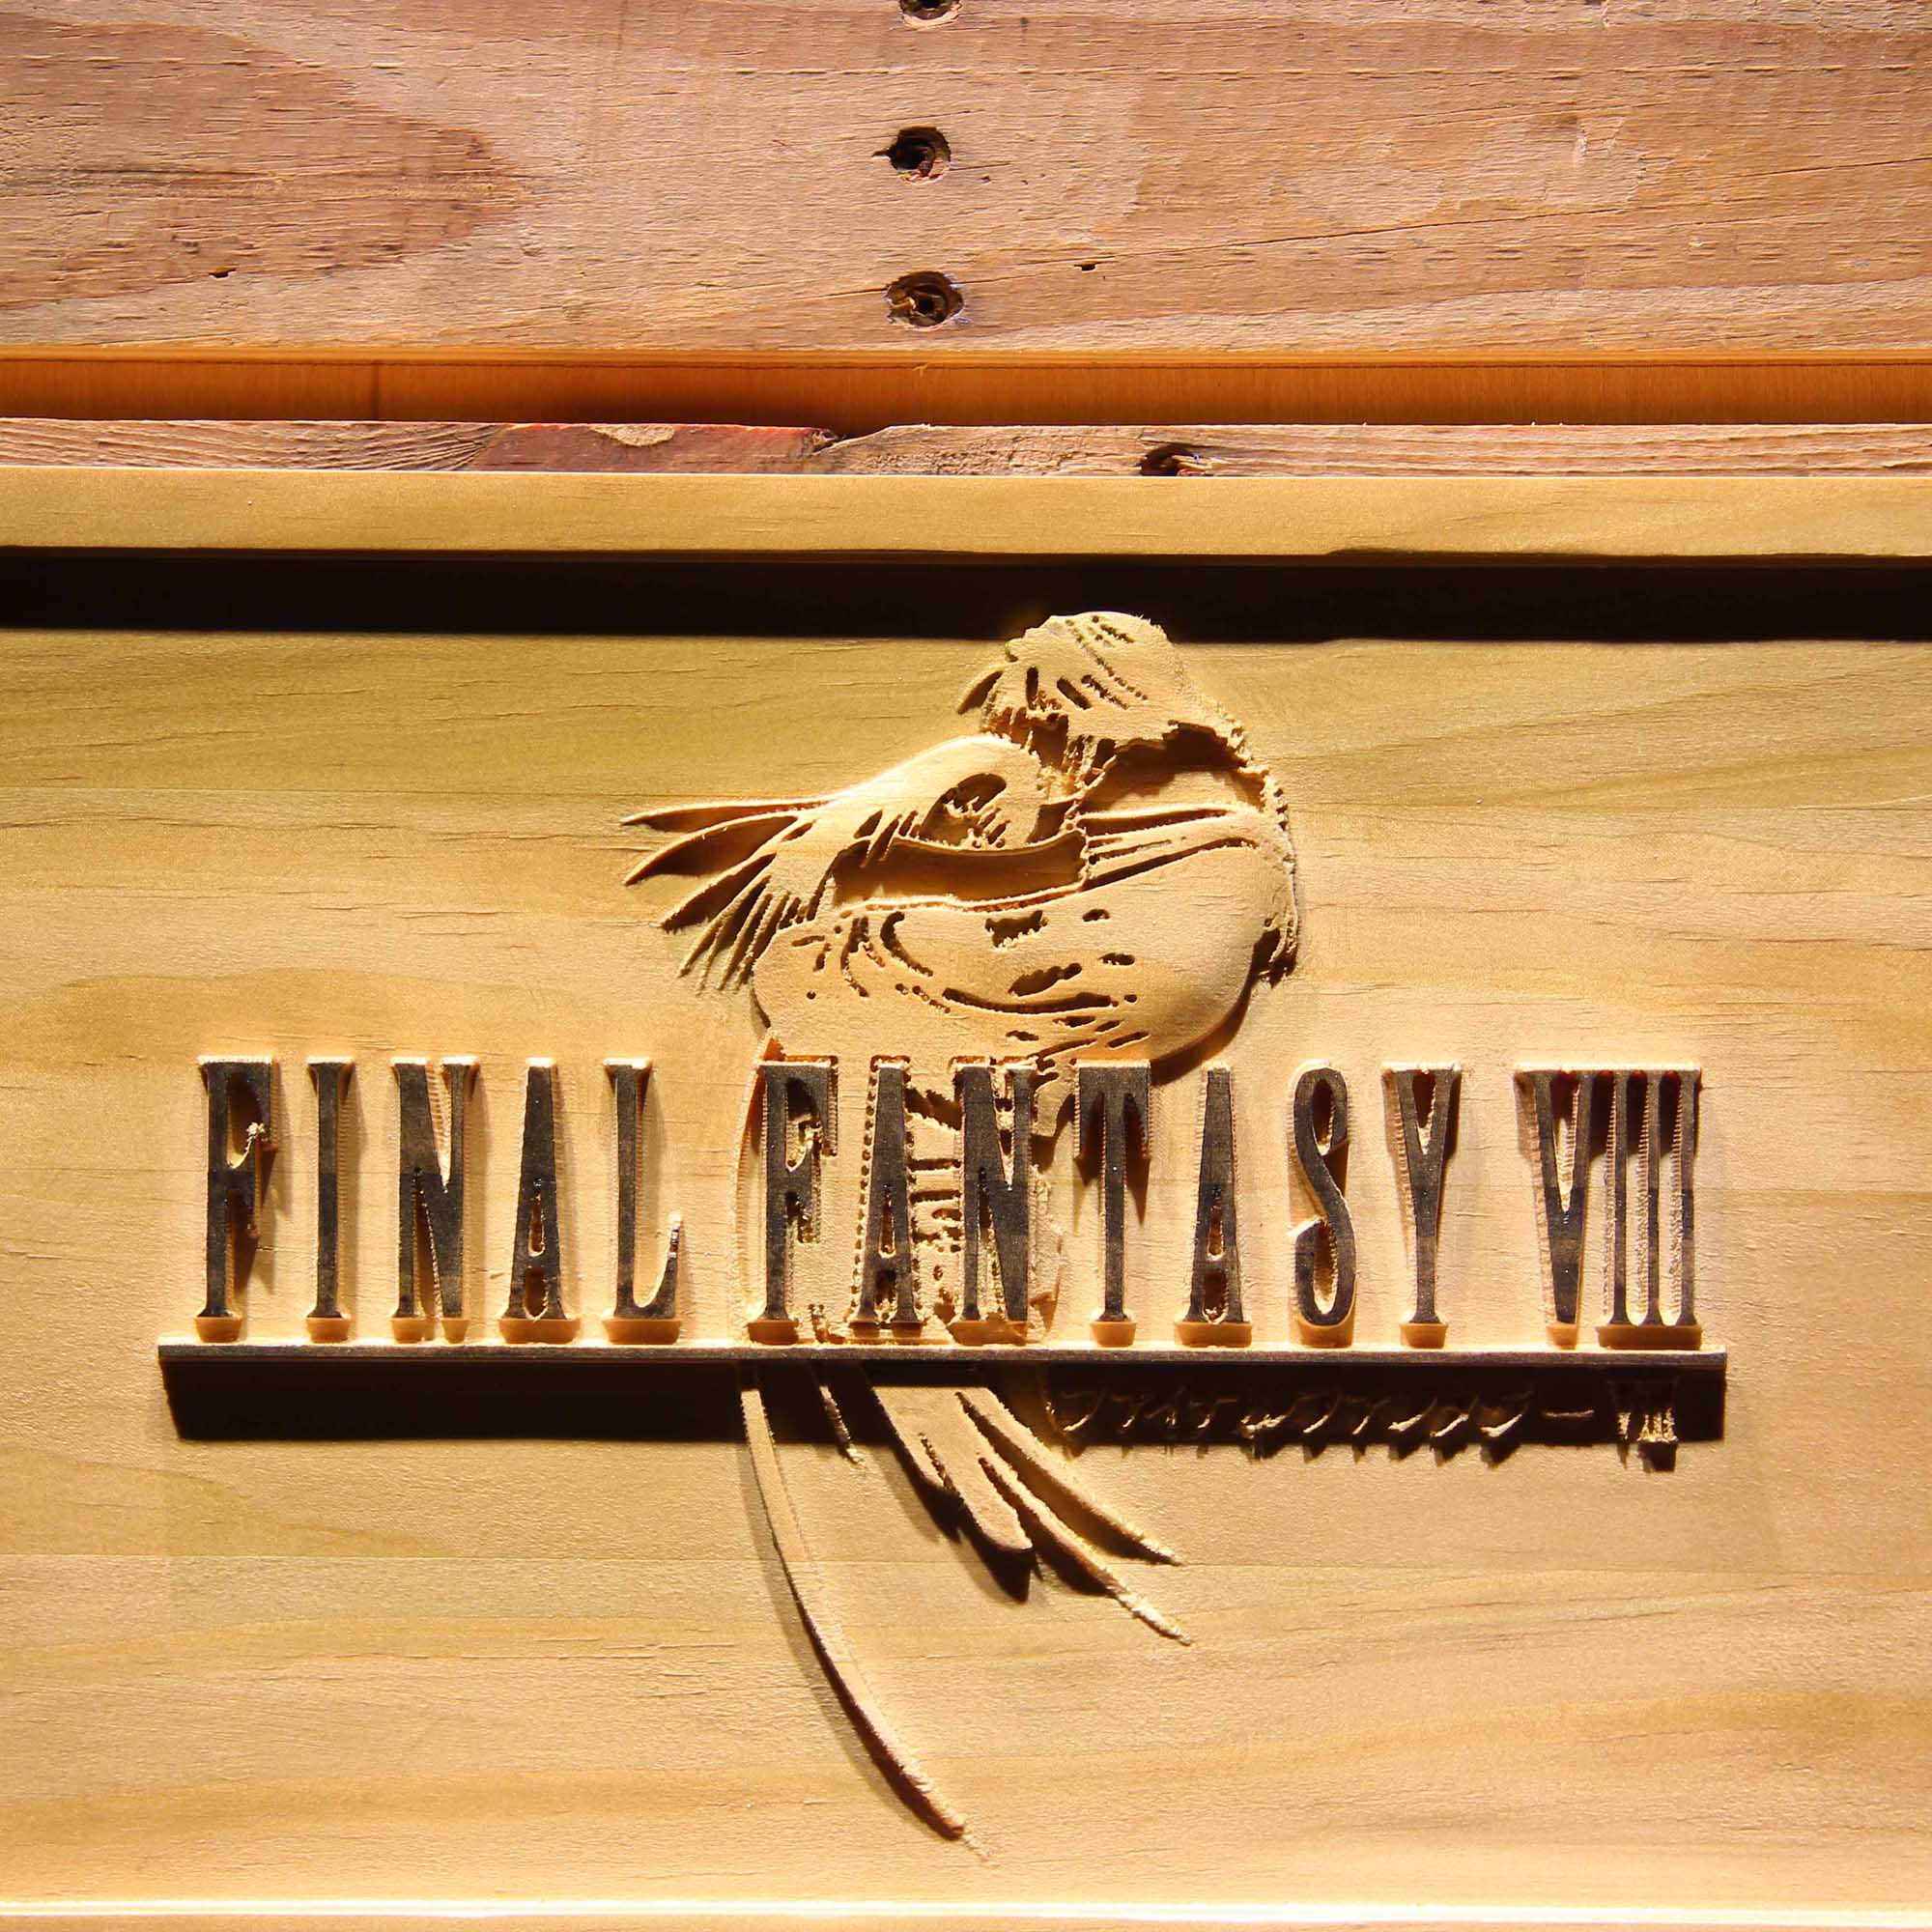 Final Fantasy VIII FF8 PS2 3D Wooden Engrave Sign